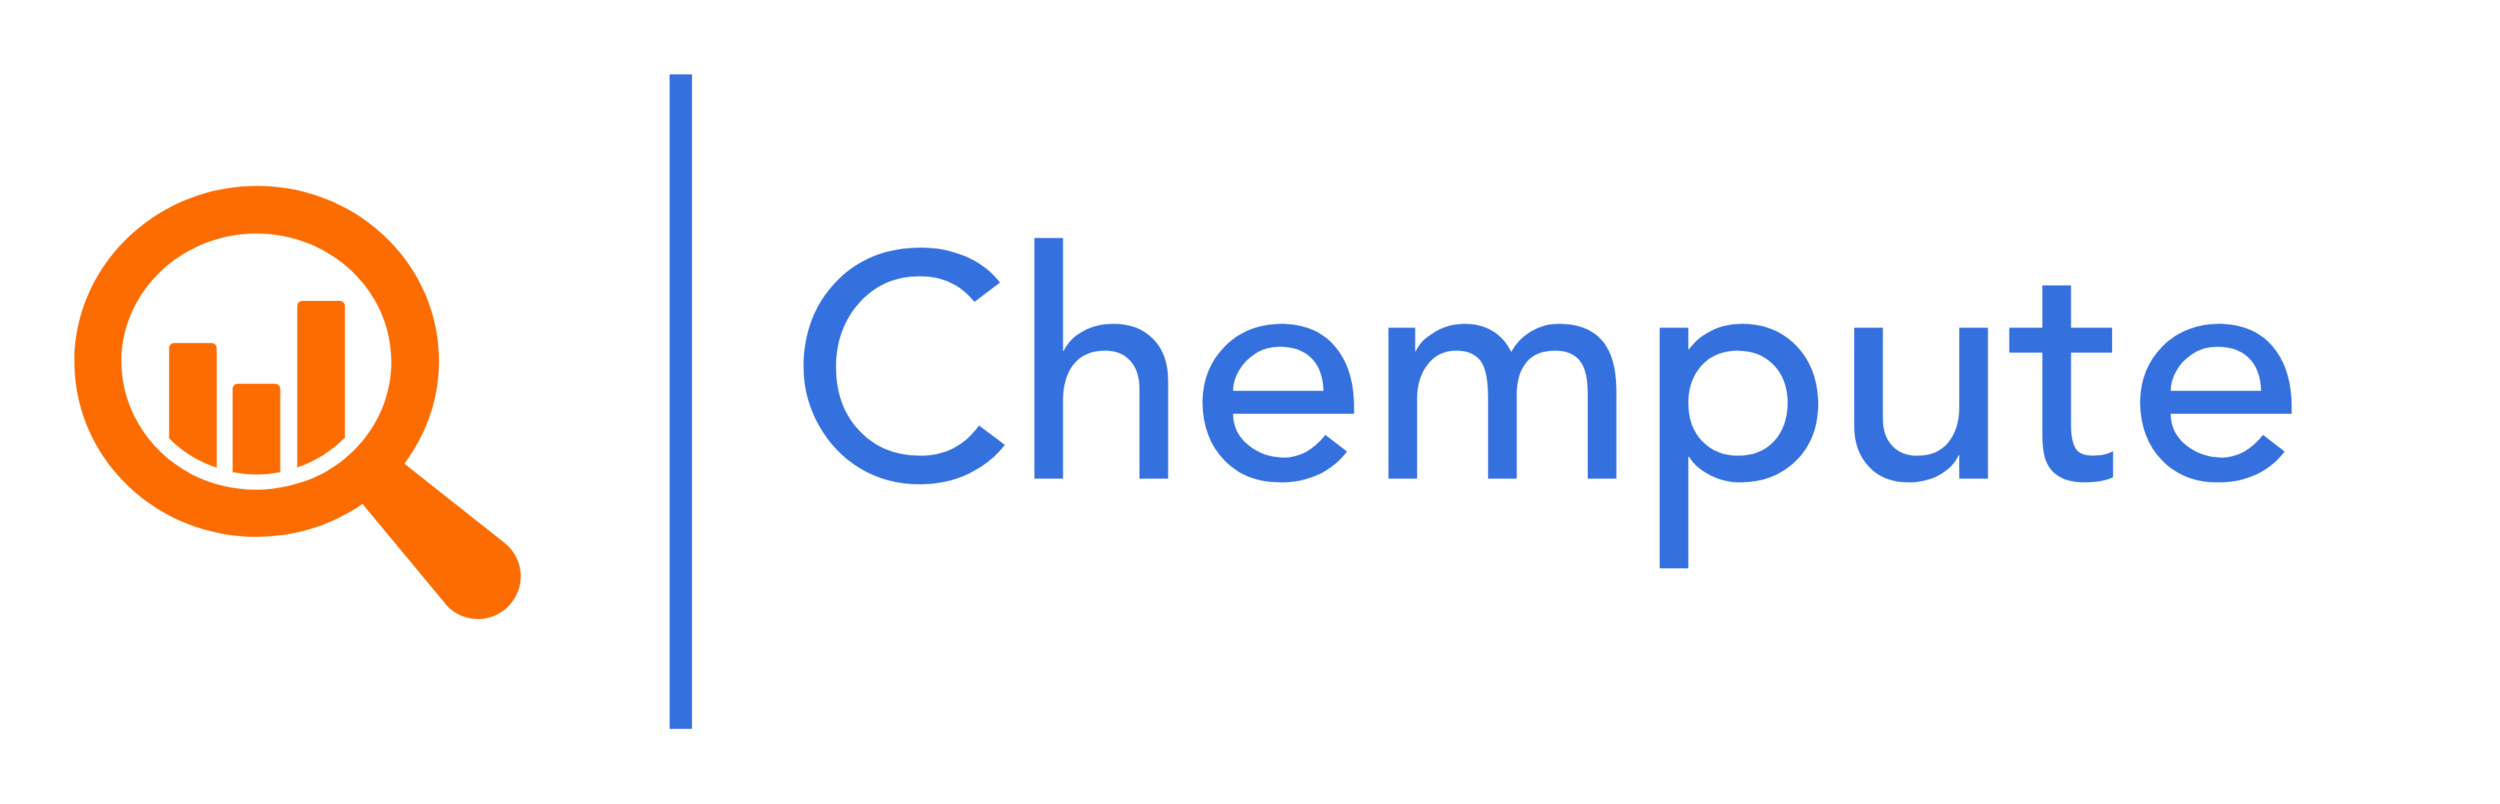 Chempute Ltd